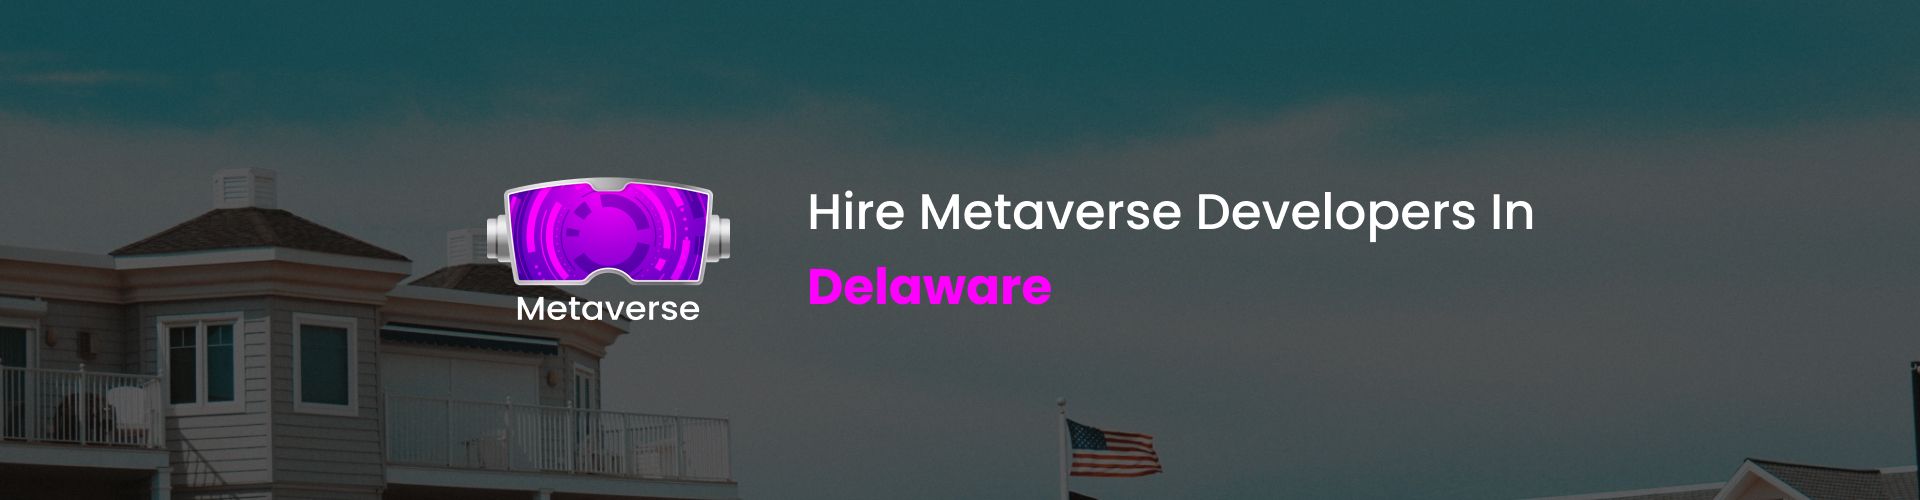 hire metaverse developers in delaware